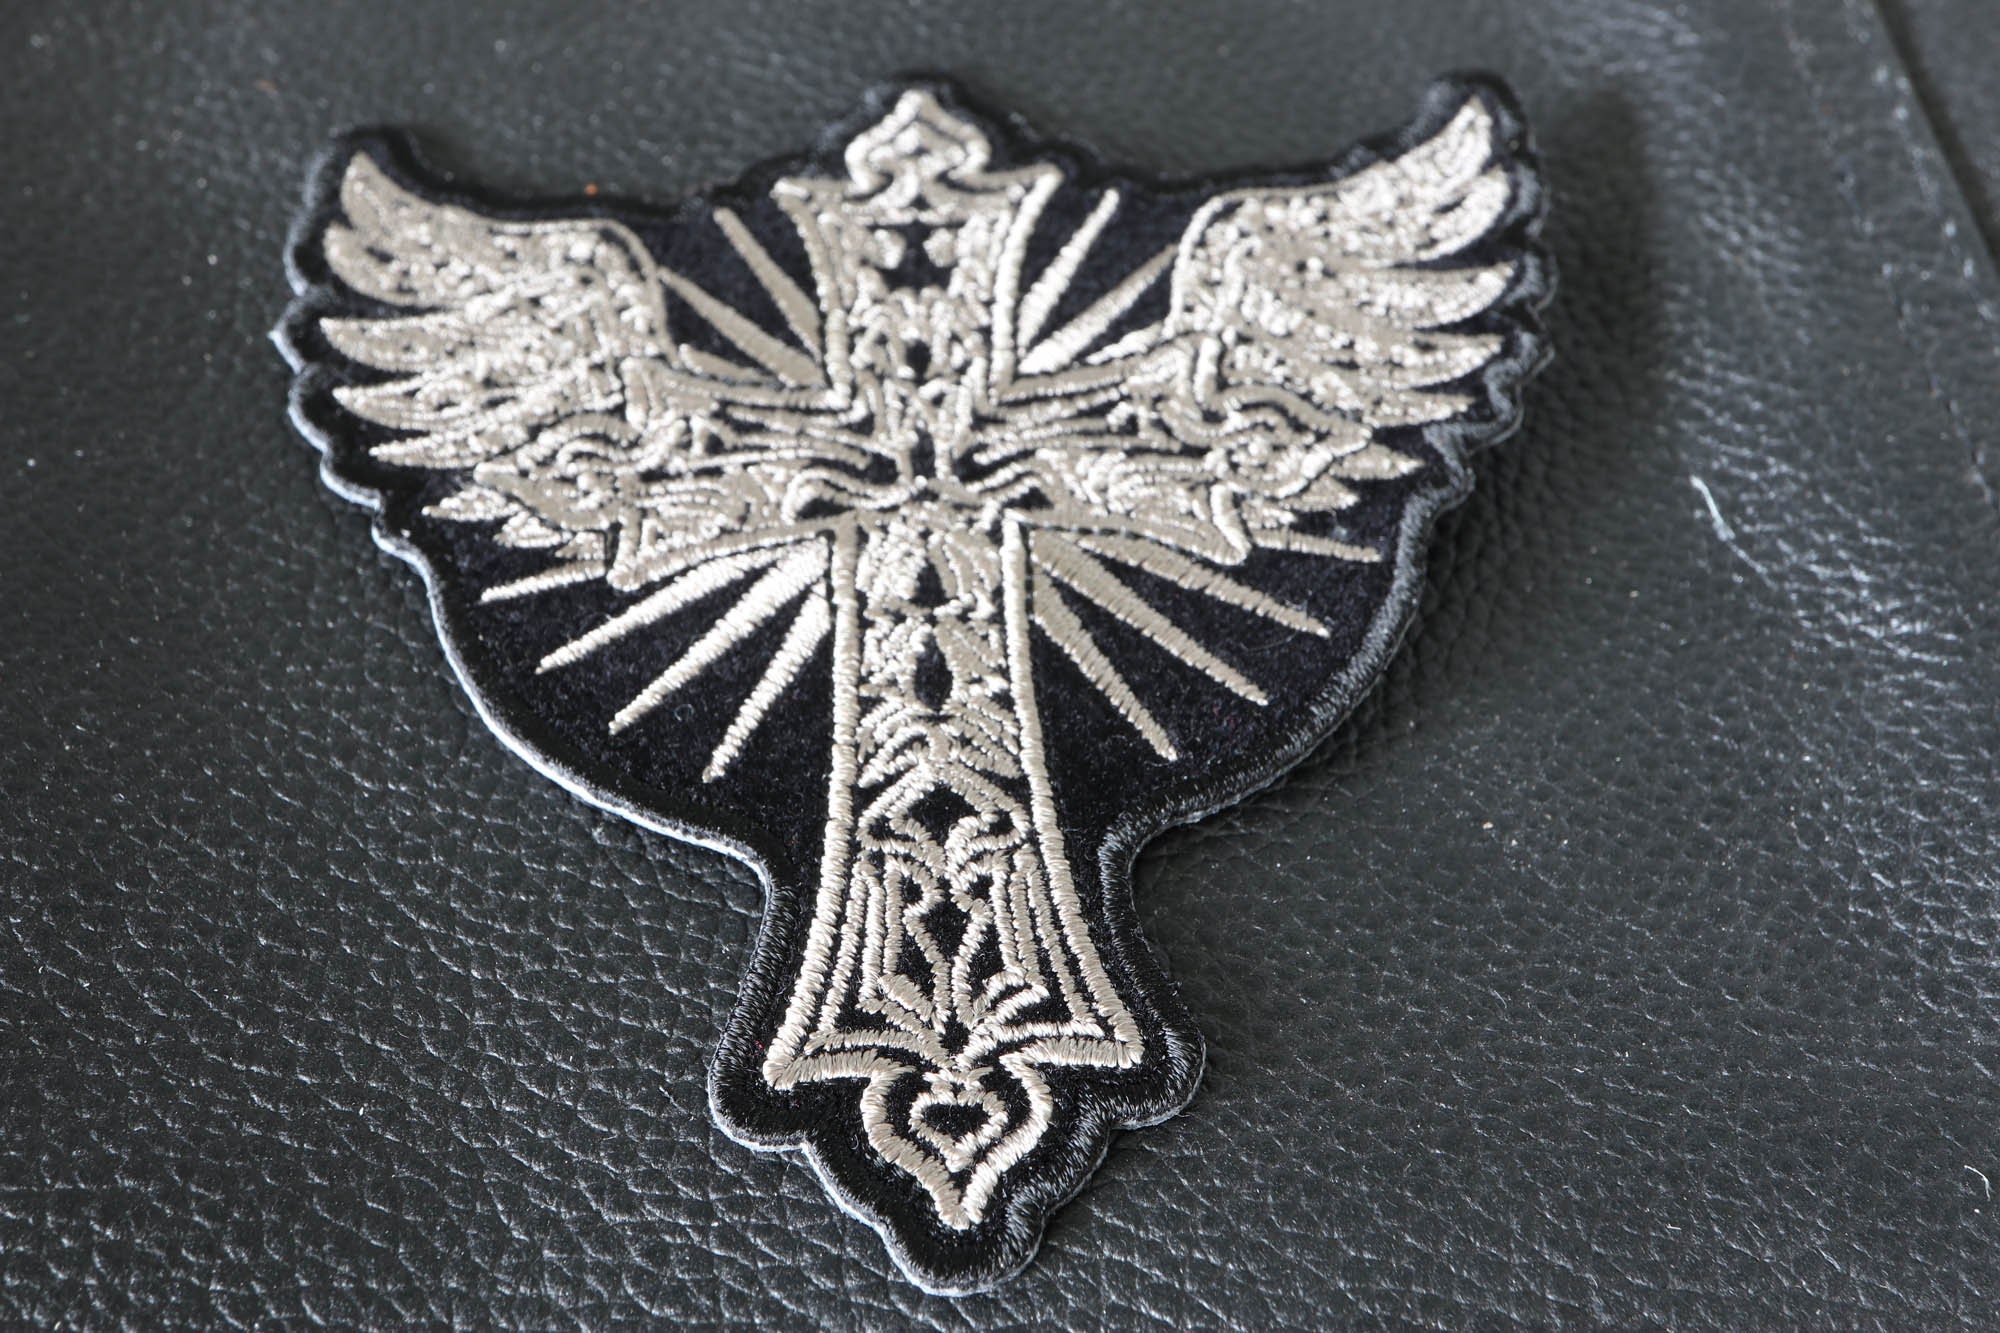 4 Metallic Silver Black Gothic Crucifix Cross Iron on Patch 